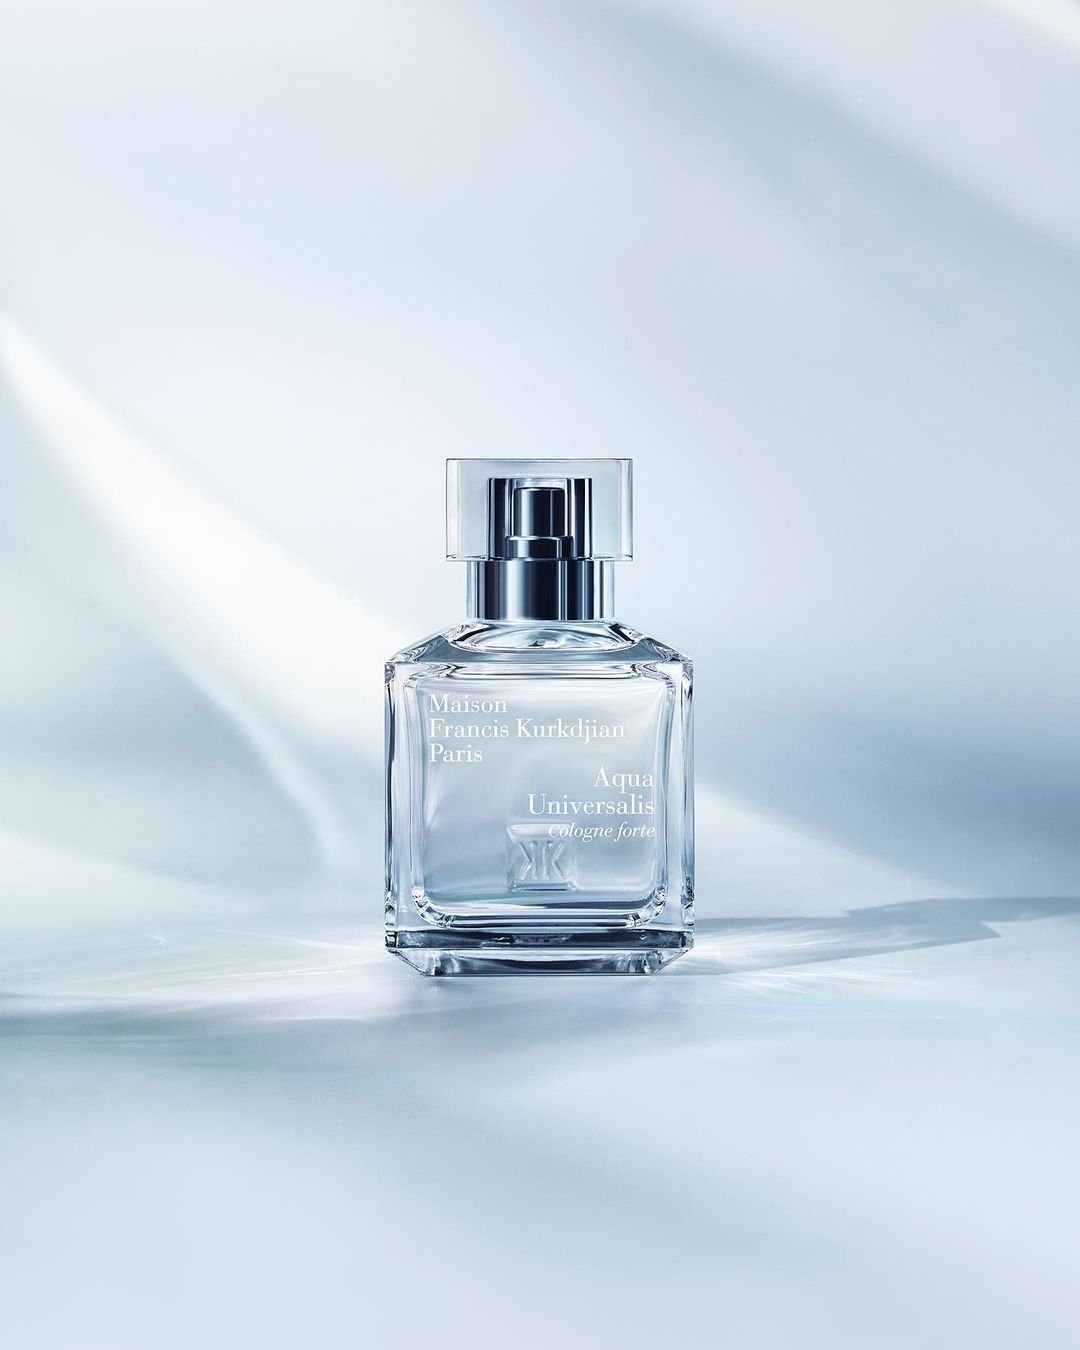 Maison Francis Kurkdjian - Aqua Universalis cologne forte | Perfume Lounge